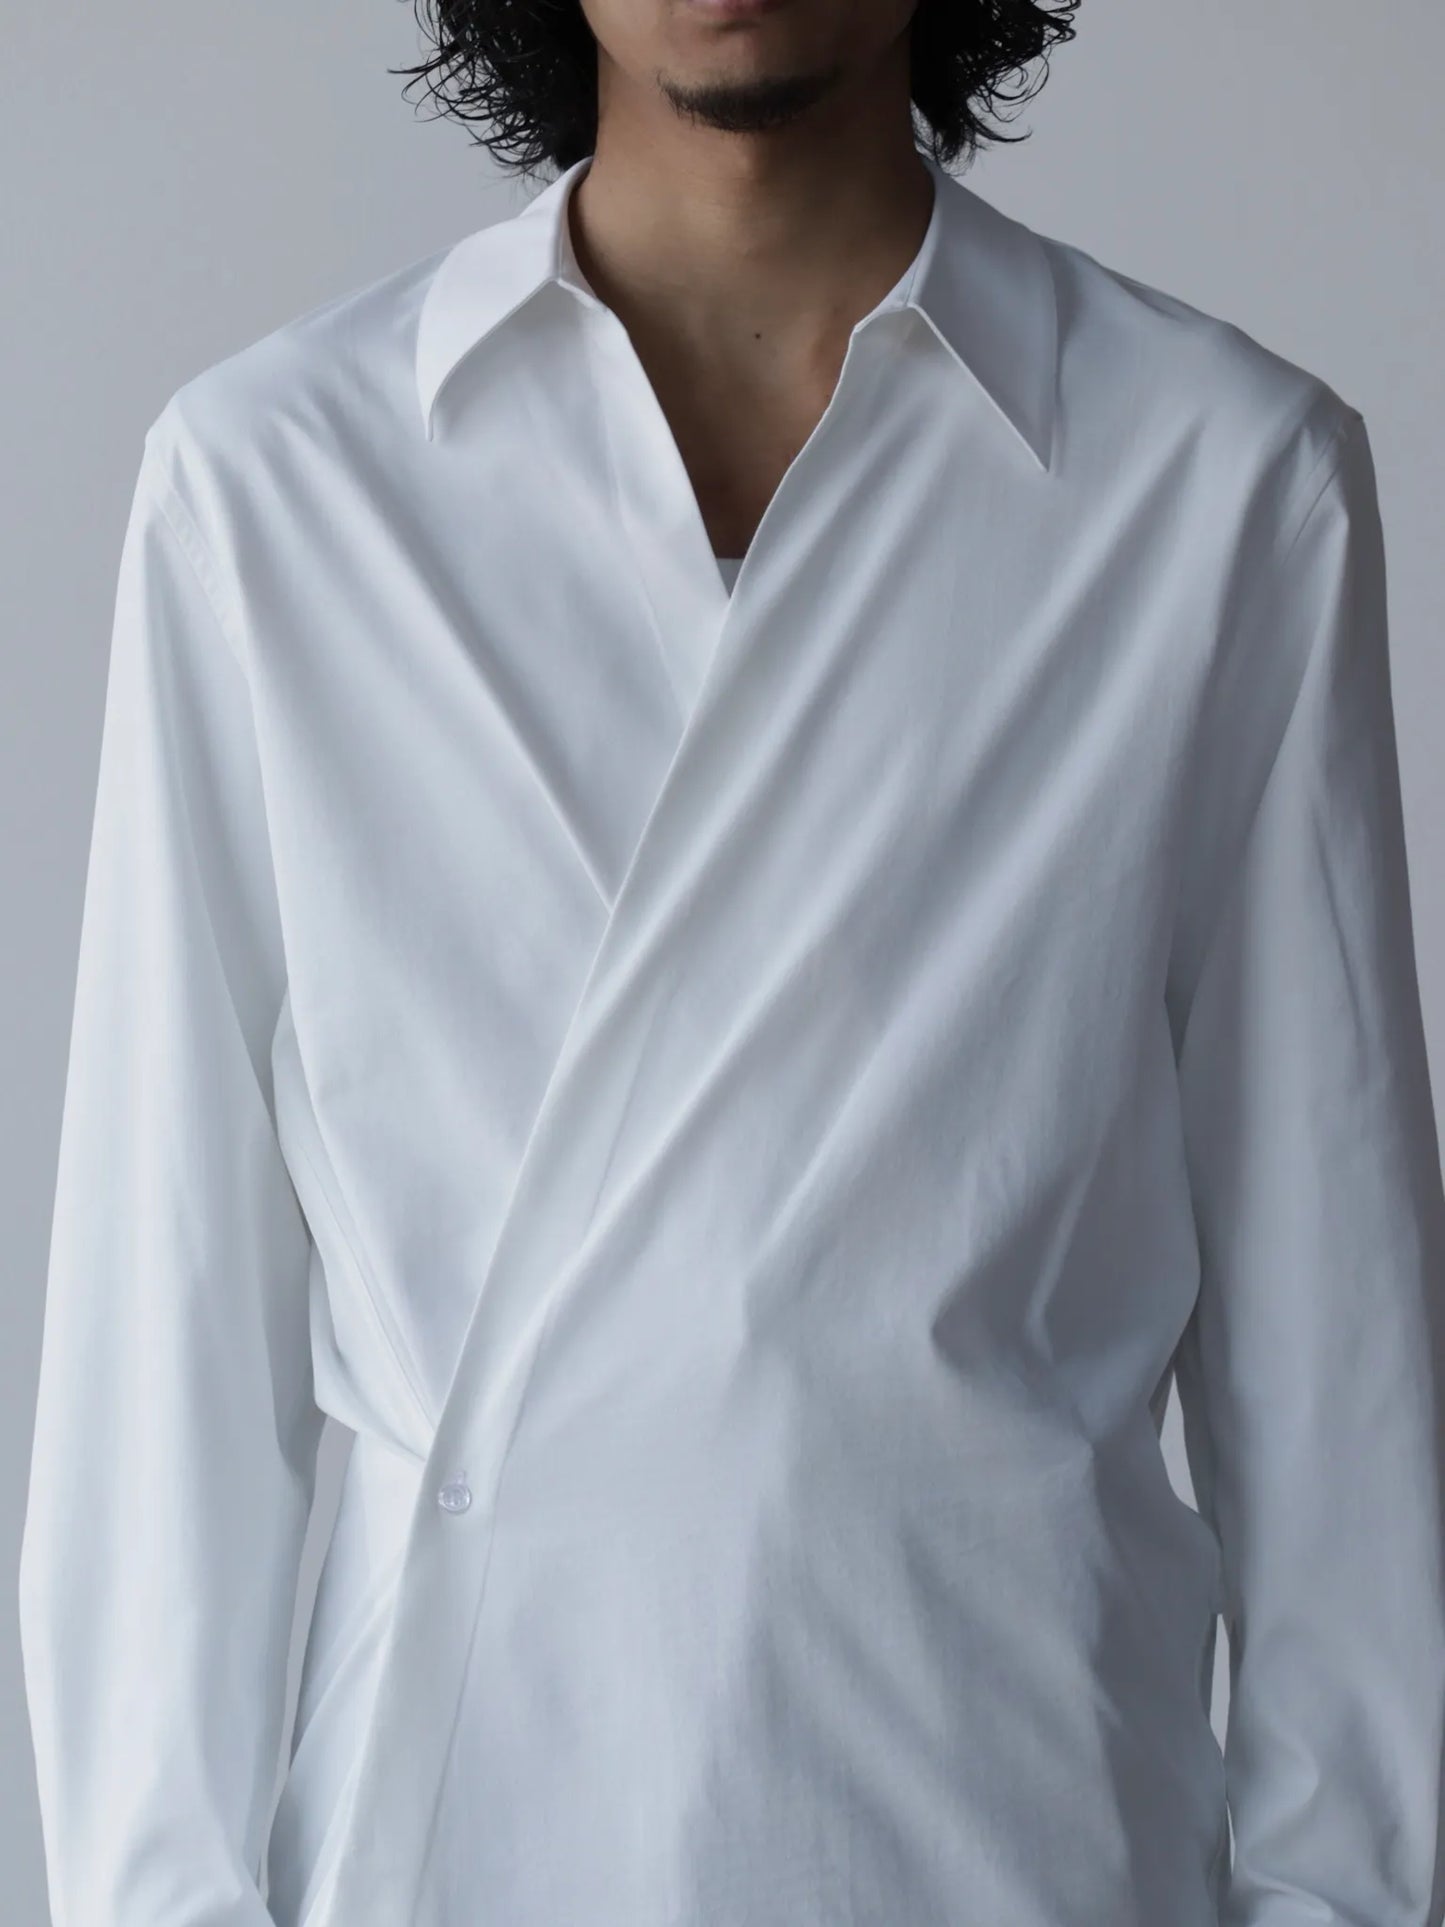 sean-suen-slanted-placket-shirt-white-2